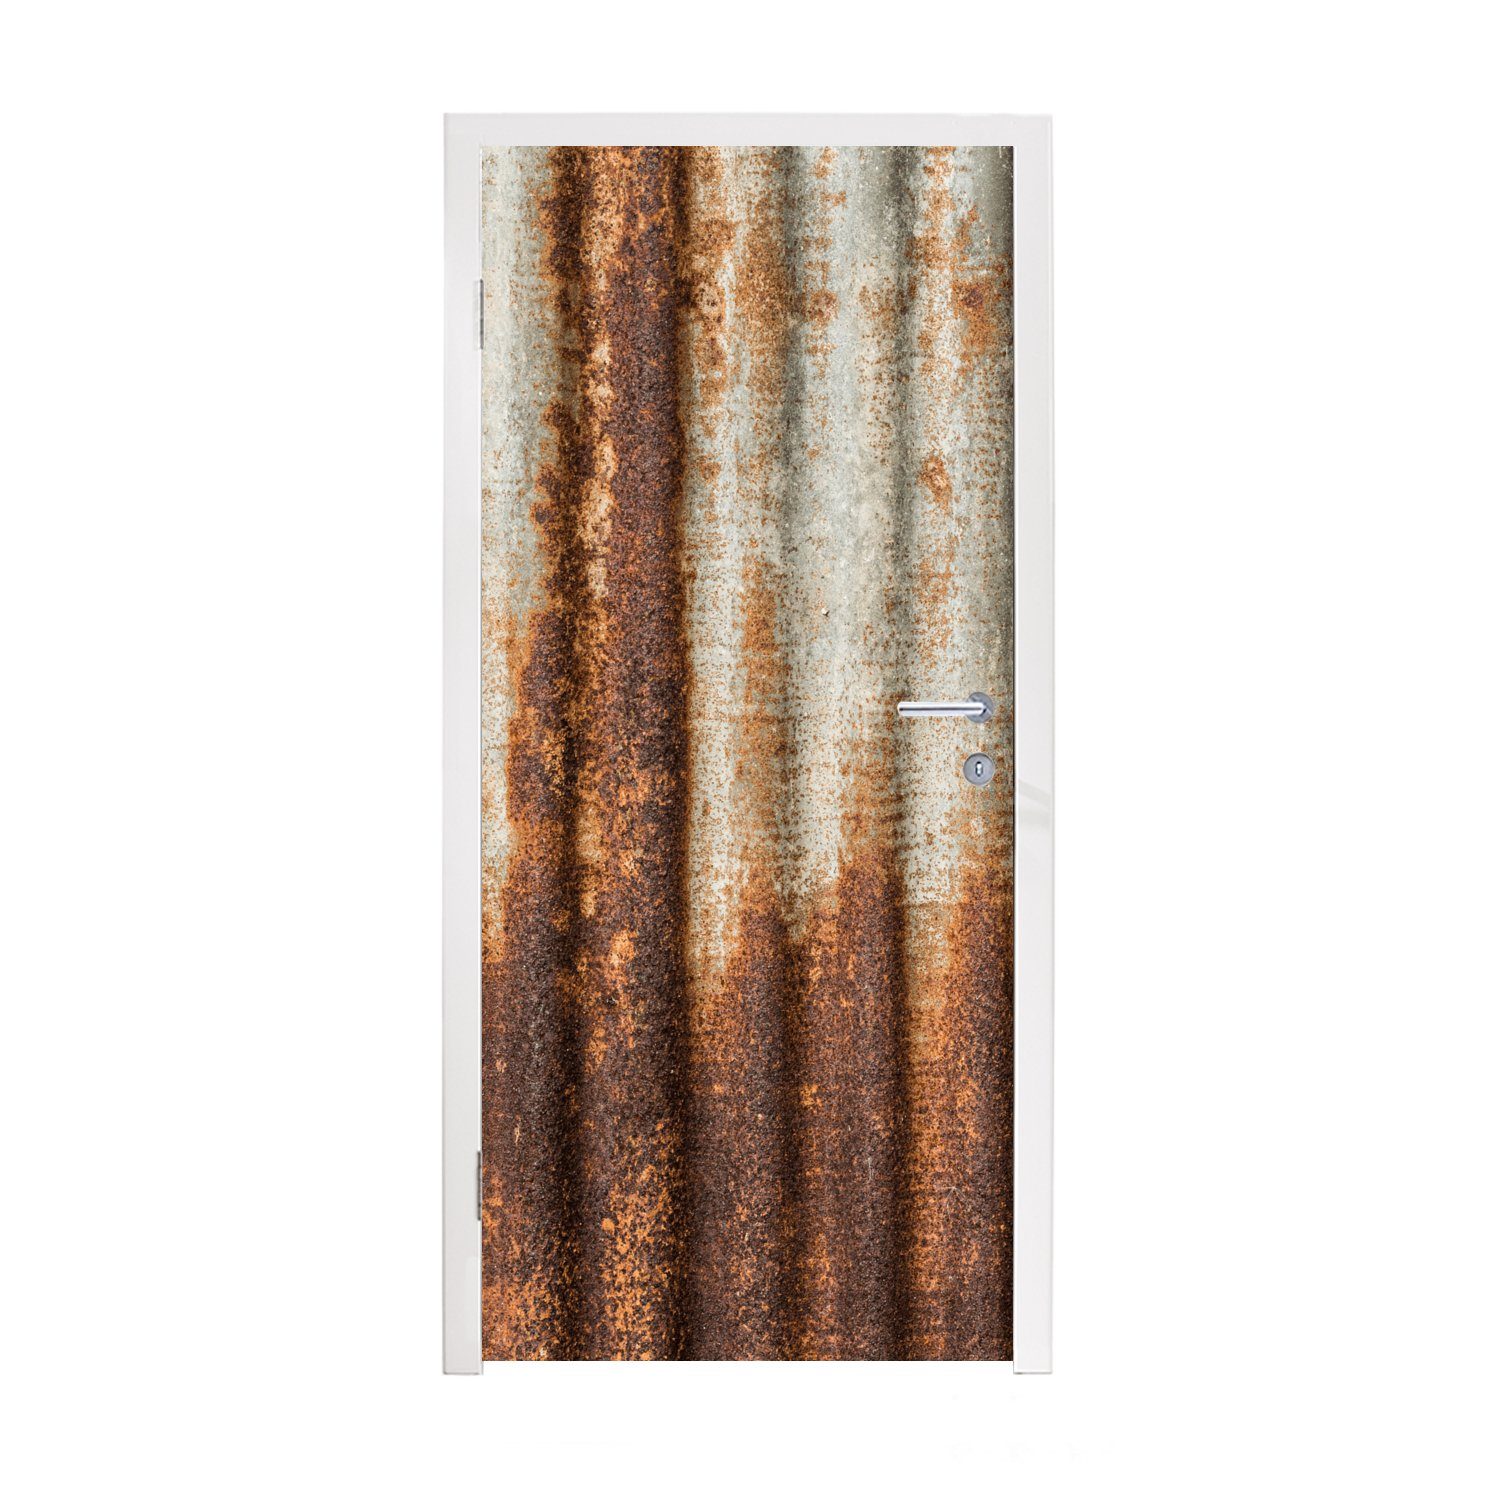 MuchoWow Türtapete Rost - Wellblech, Matt, bedruckt, (1 St), Fototapete für Tür, Türaufkleber, 75x205 cm